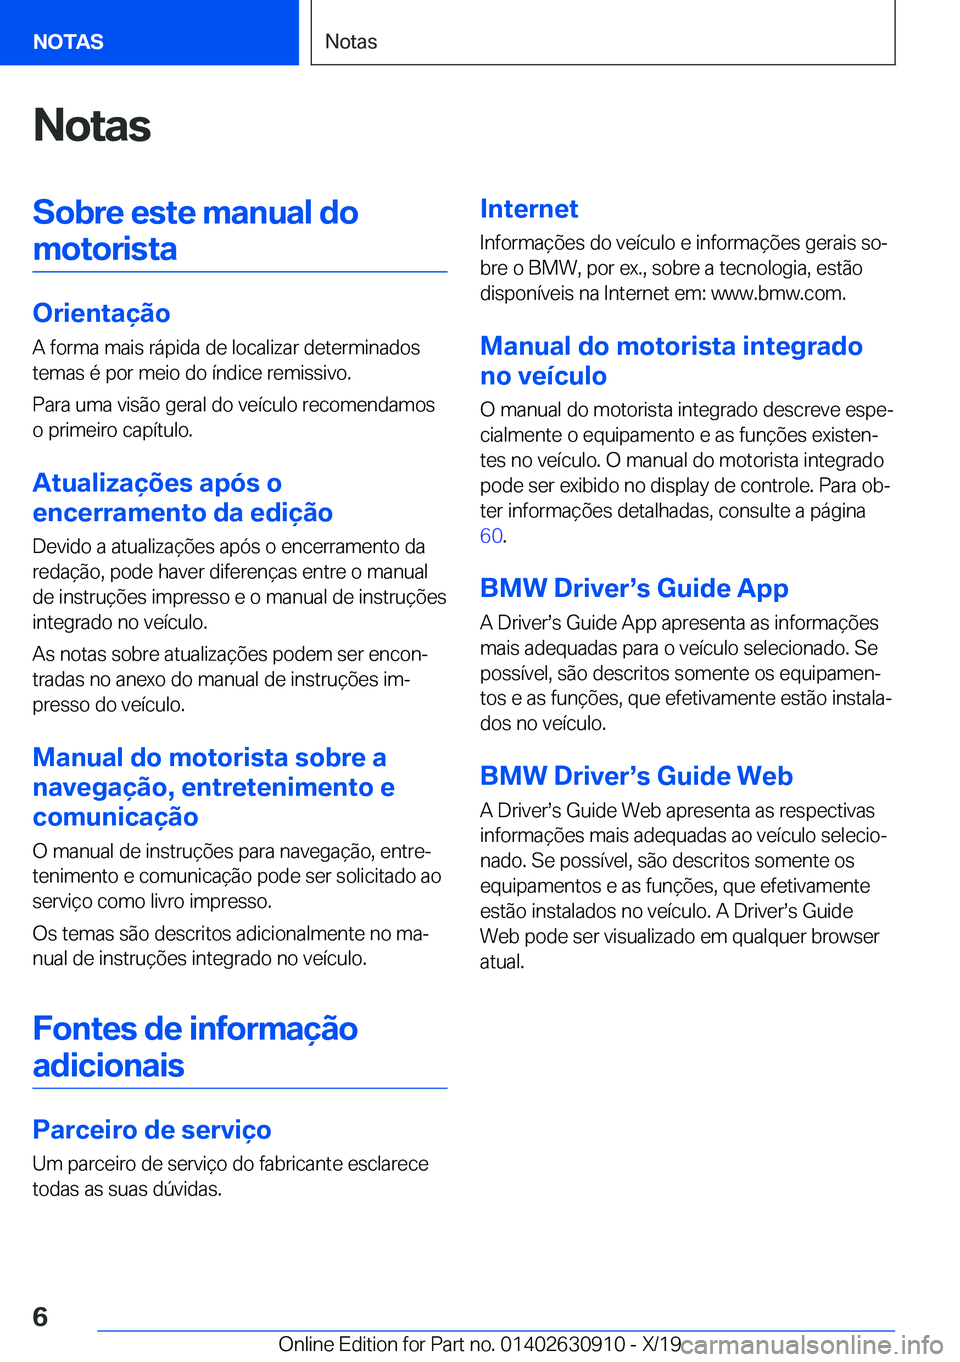 BMW X2 2020  Manual do condutor (in Portuguese) �N�o�t�a�s�S�o�b�r�e��e�s�t�e��m�a�n�u�a�l��d�o�m�o�t�o�r�i�s�t�a
�O�r�i�e�n�t�a�